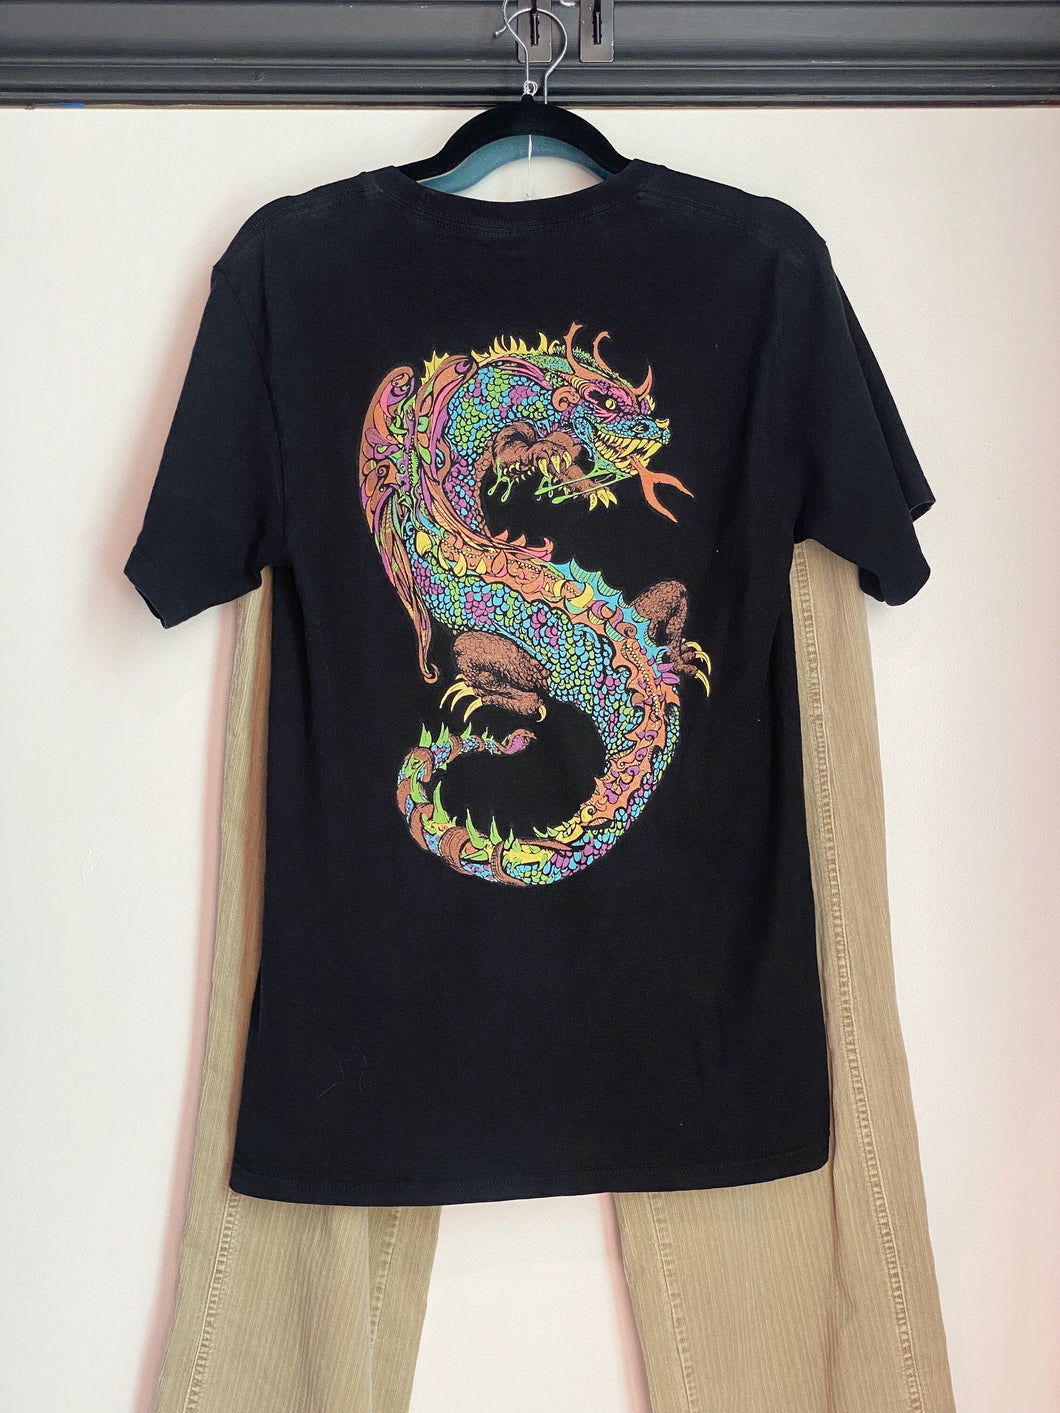 RARE Vintage Stüssy Dragon Graphics T-Shirt / 80s 90s 2000s Graphic Tee